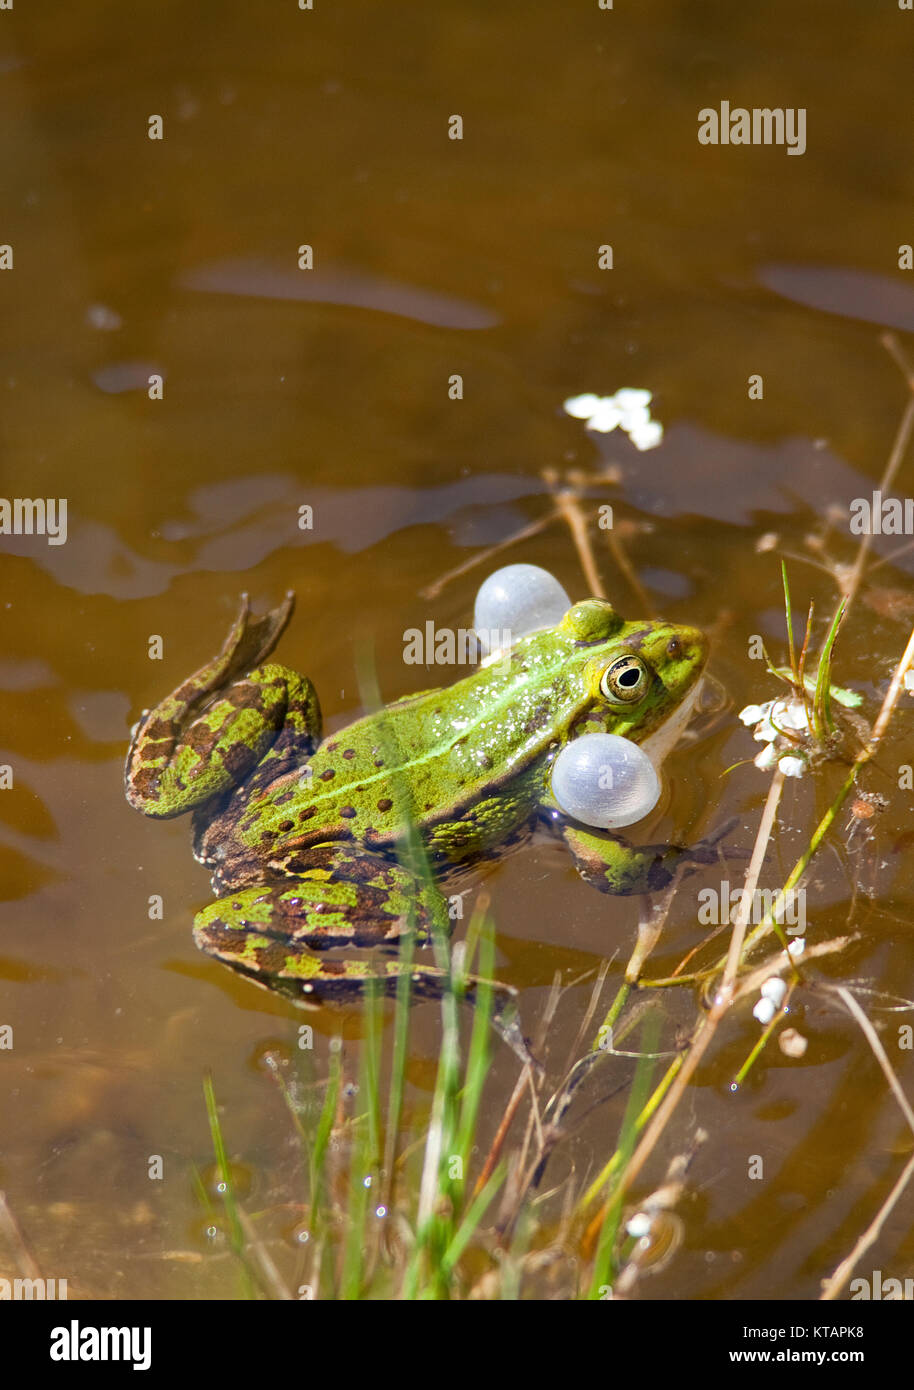 Edible frog, Common water frog (Rana kl. esculenta), also named green frog, in a pond at Middelhagen, Moenchgut, Ruegen island, Baltic sea, Germany Stock Photo